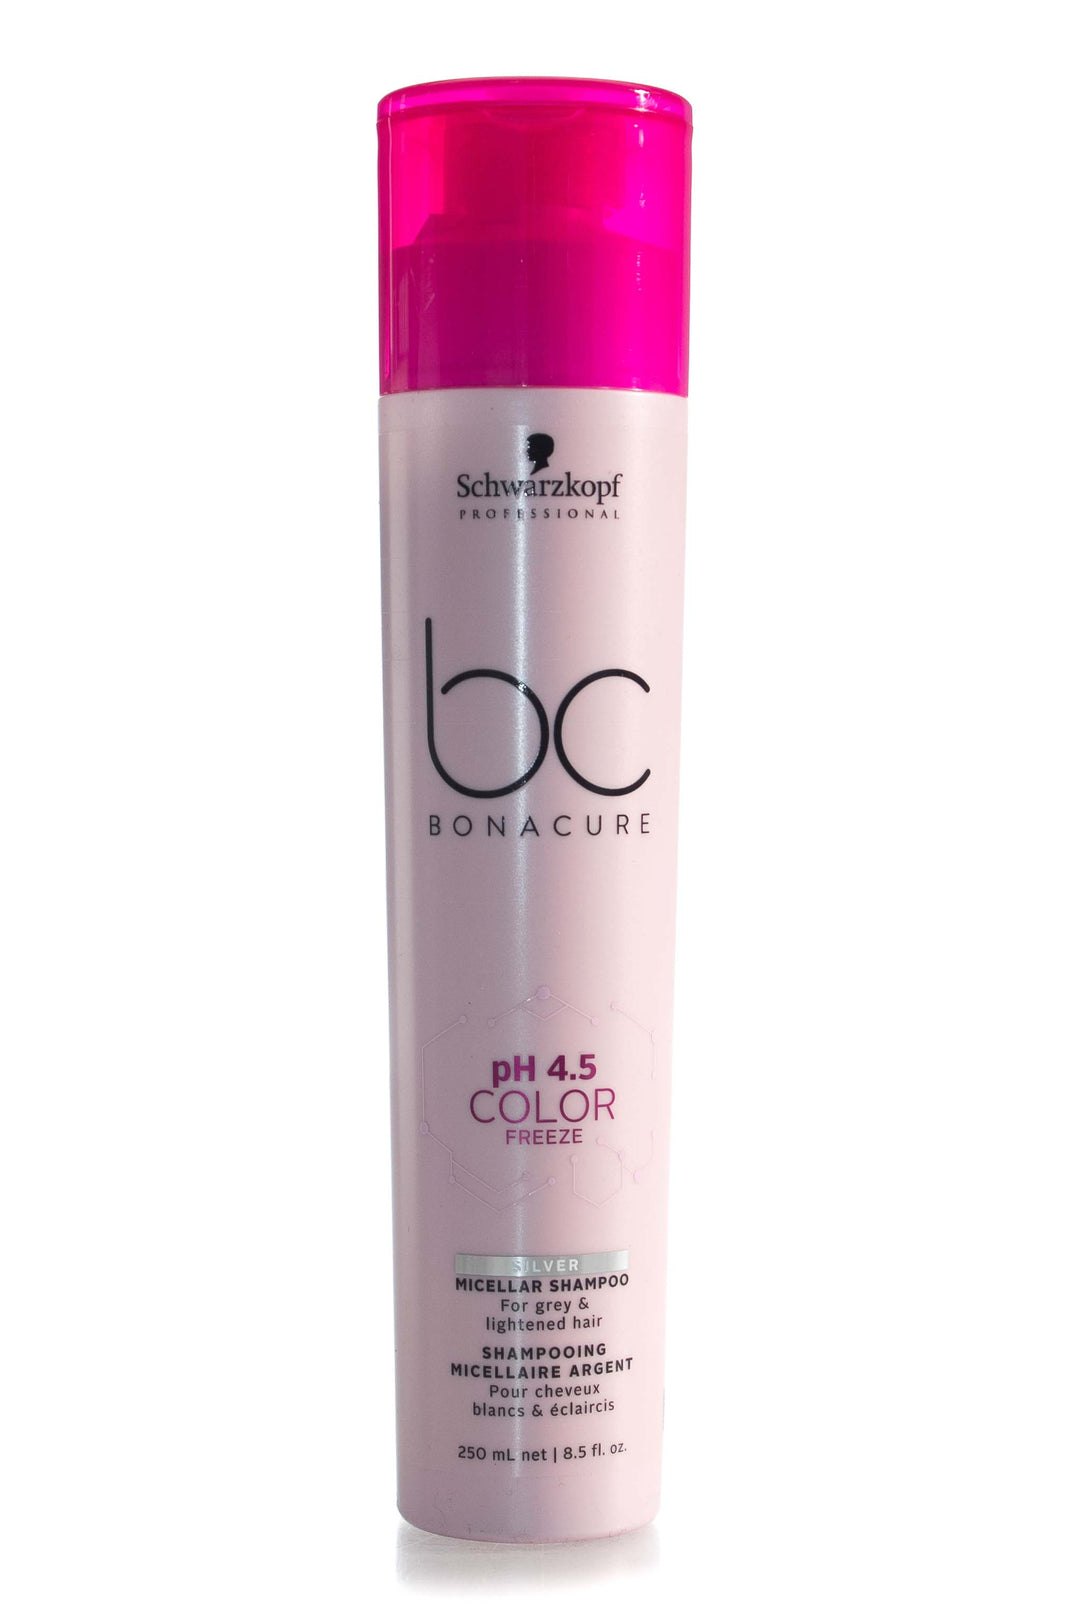 schwarzkopf-bc-bonacure-ph-4.5-color-freeze-silver-micellar-shampoo-250ml